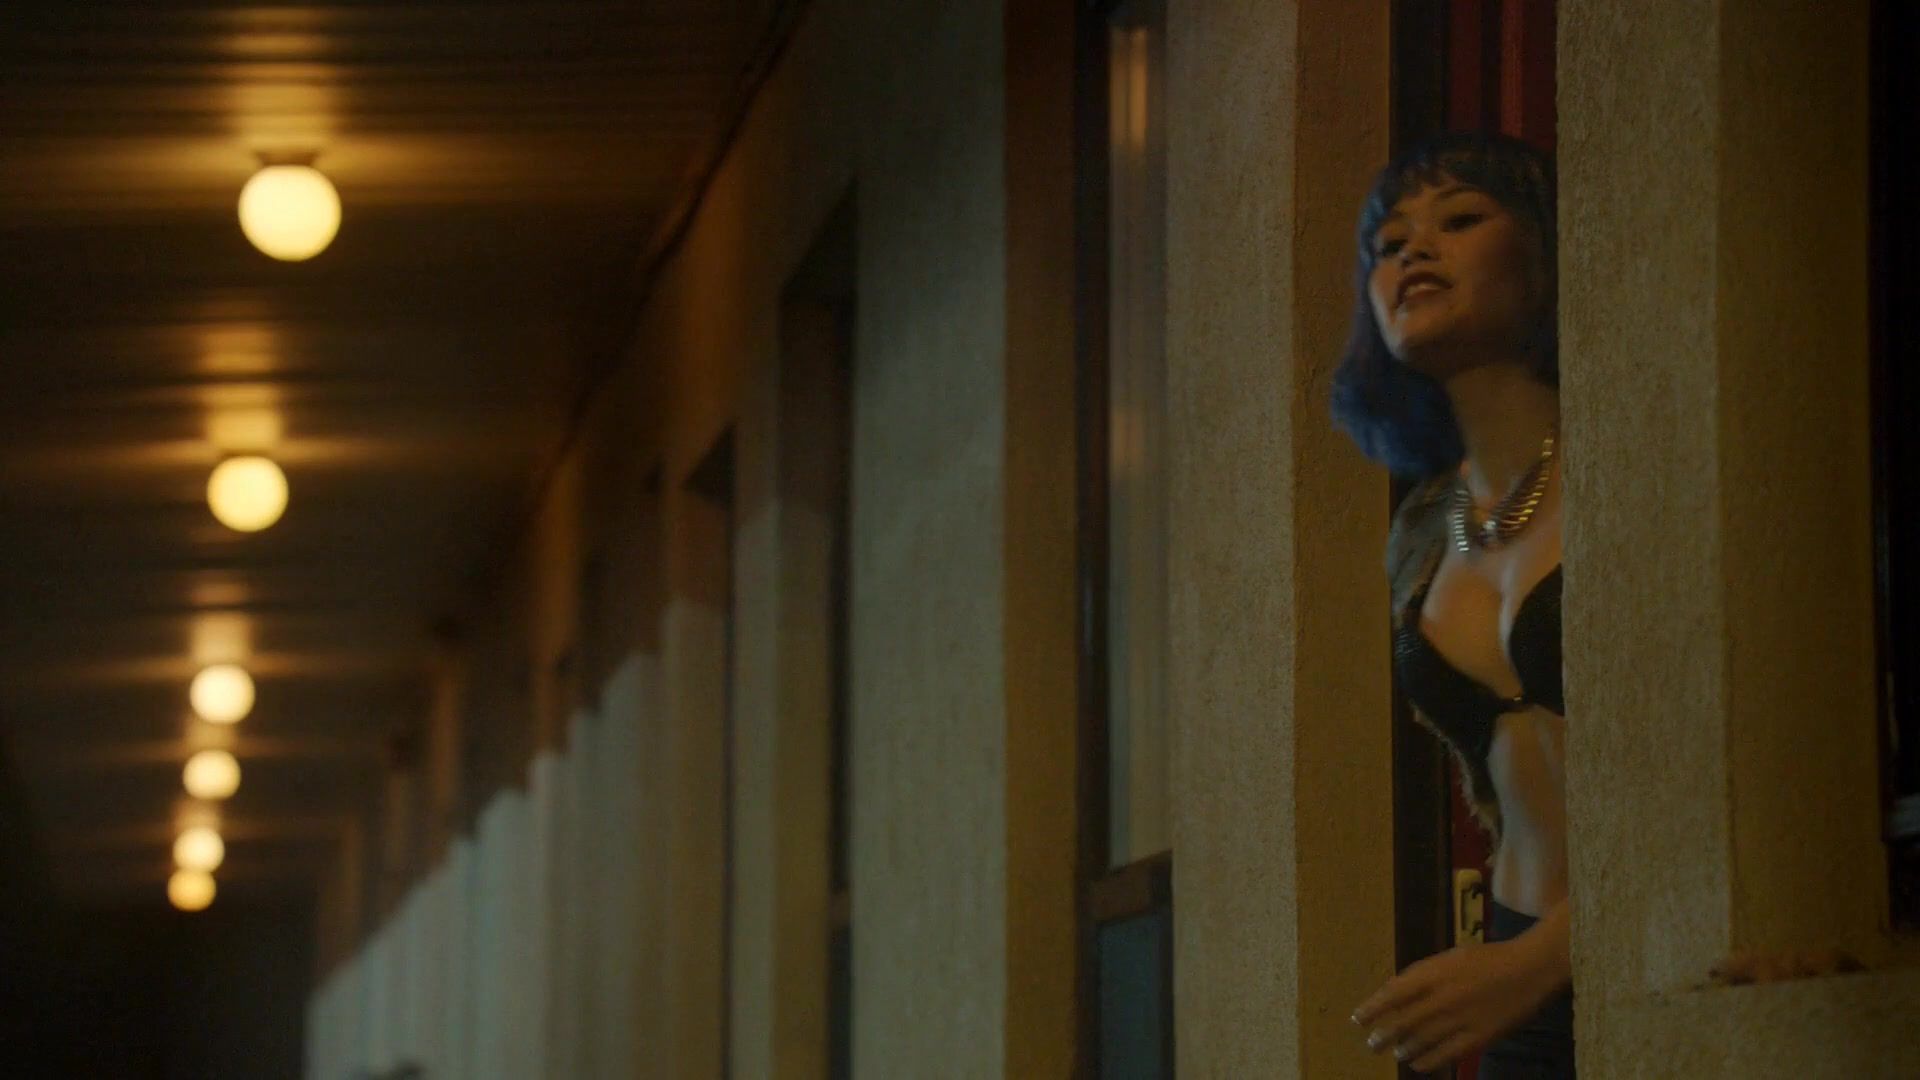 Soles Sex video Loretta Yu naked celebs - Hemlock Grove Season 2 Episode 2 (2014) XBiz